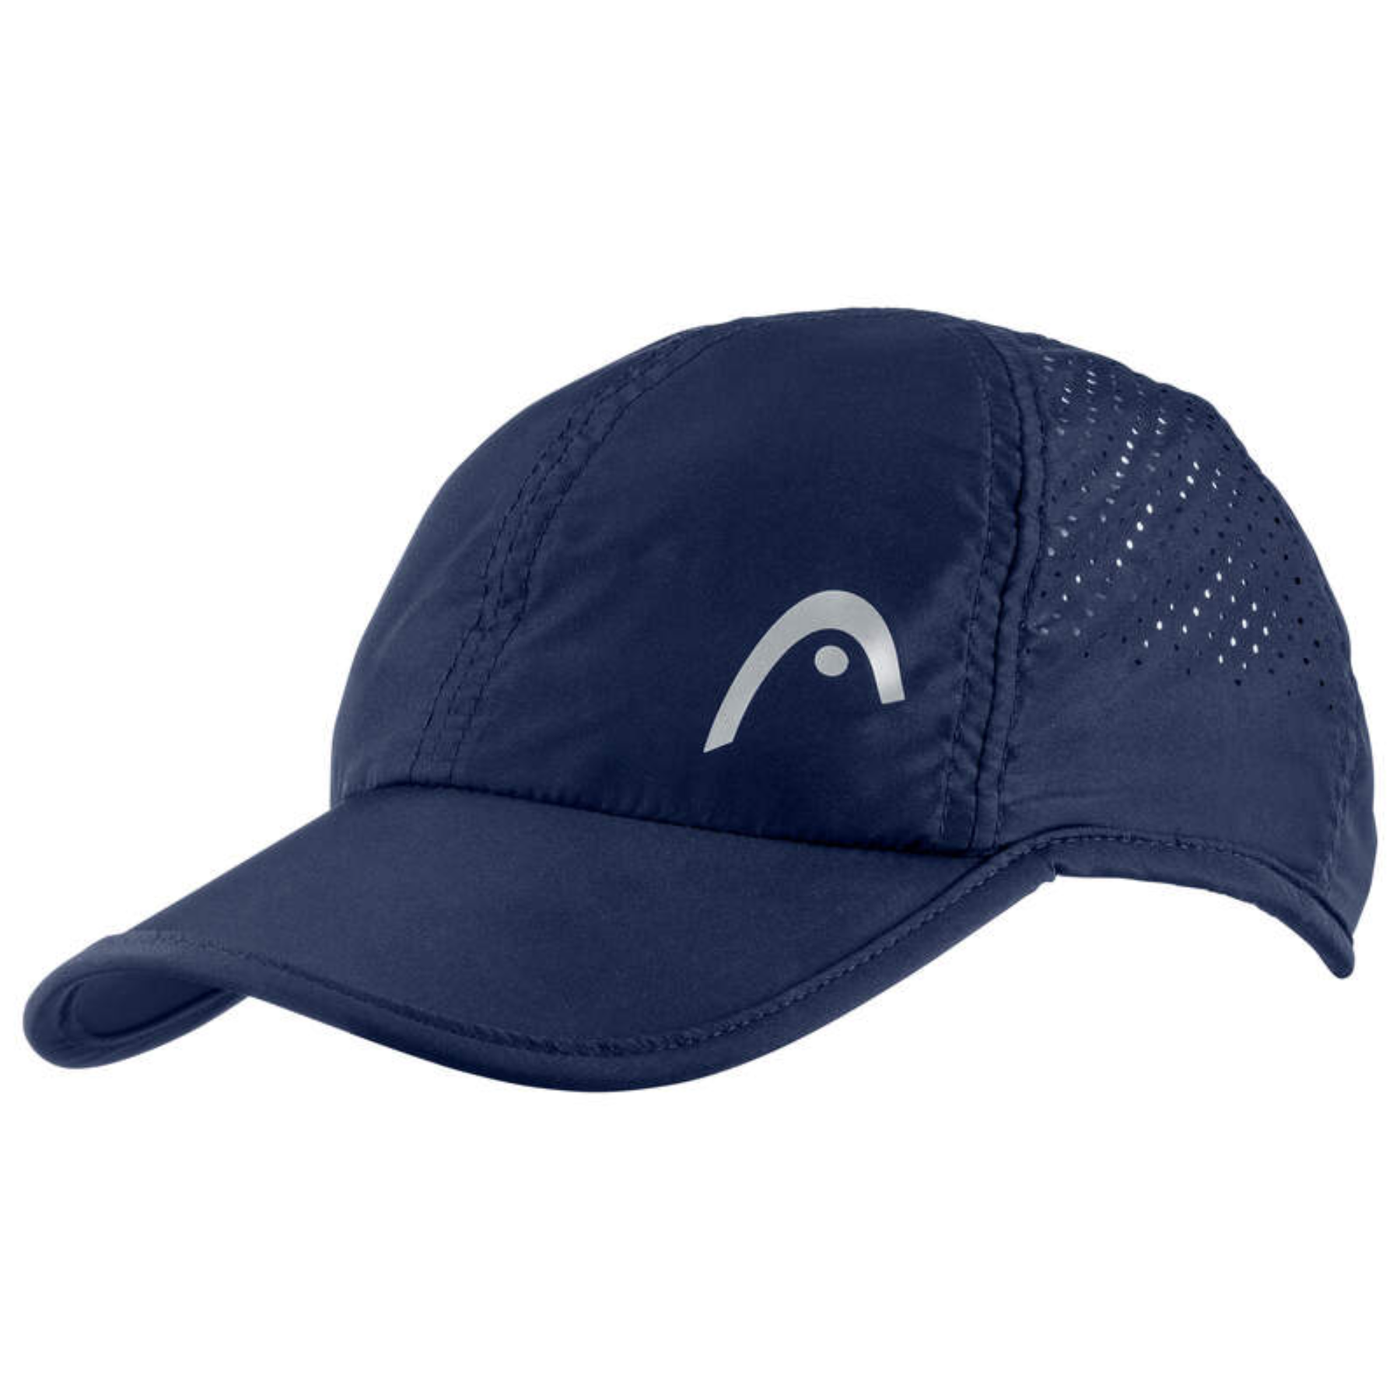 Head Pro Player Tennis Cap - Navy Blue